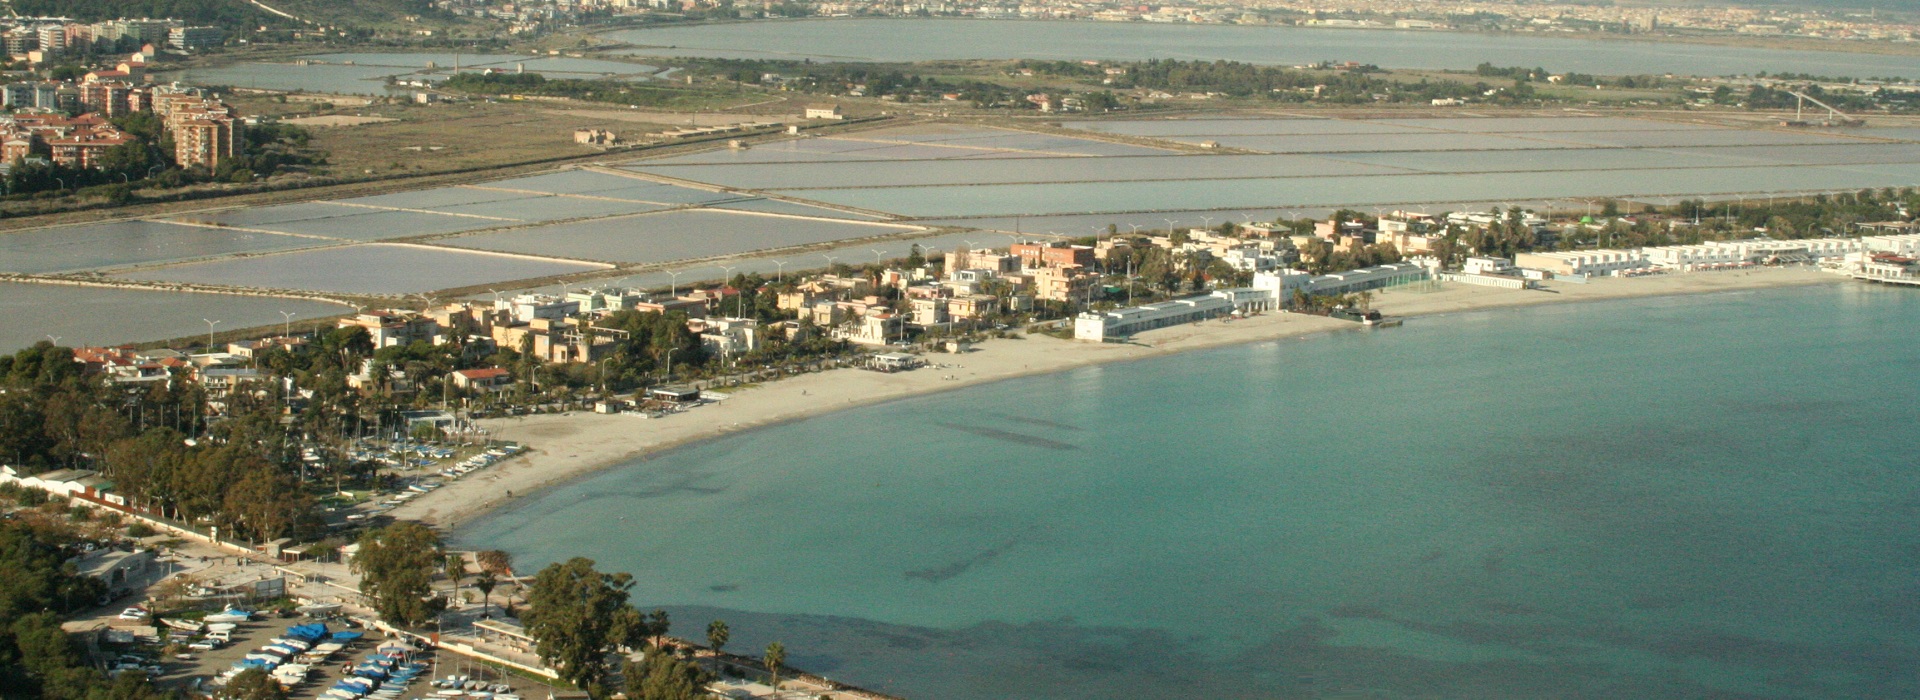 The 'Golfo degli Angeli' bay